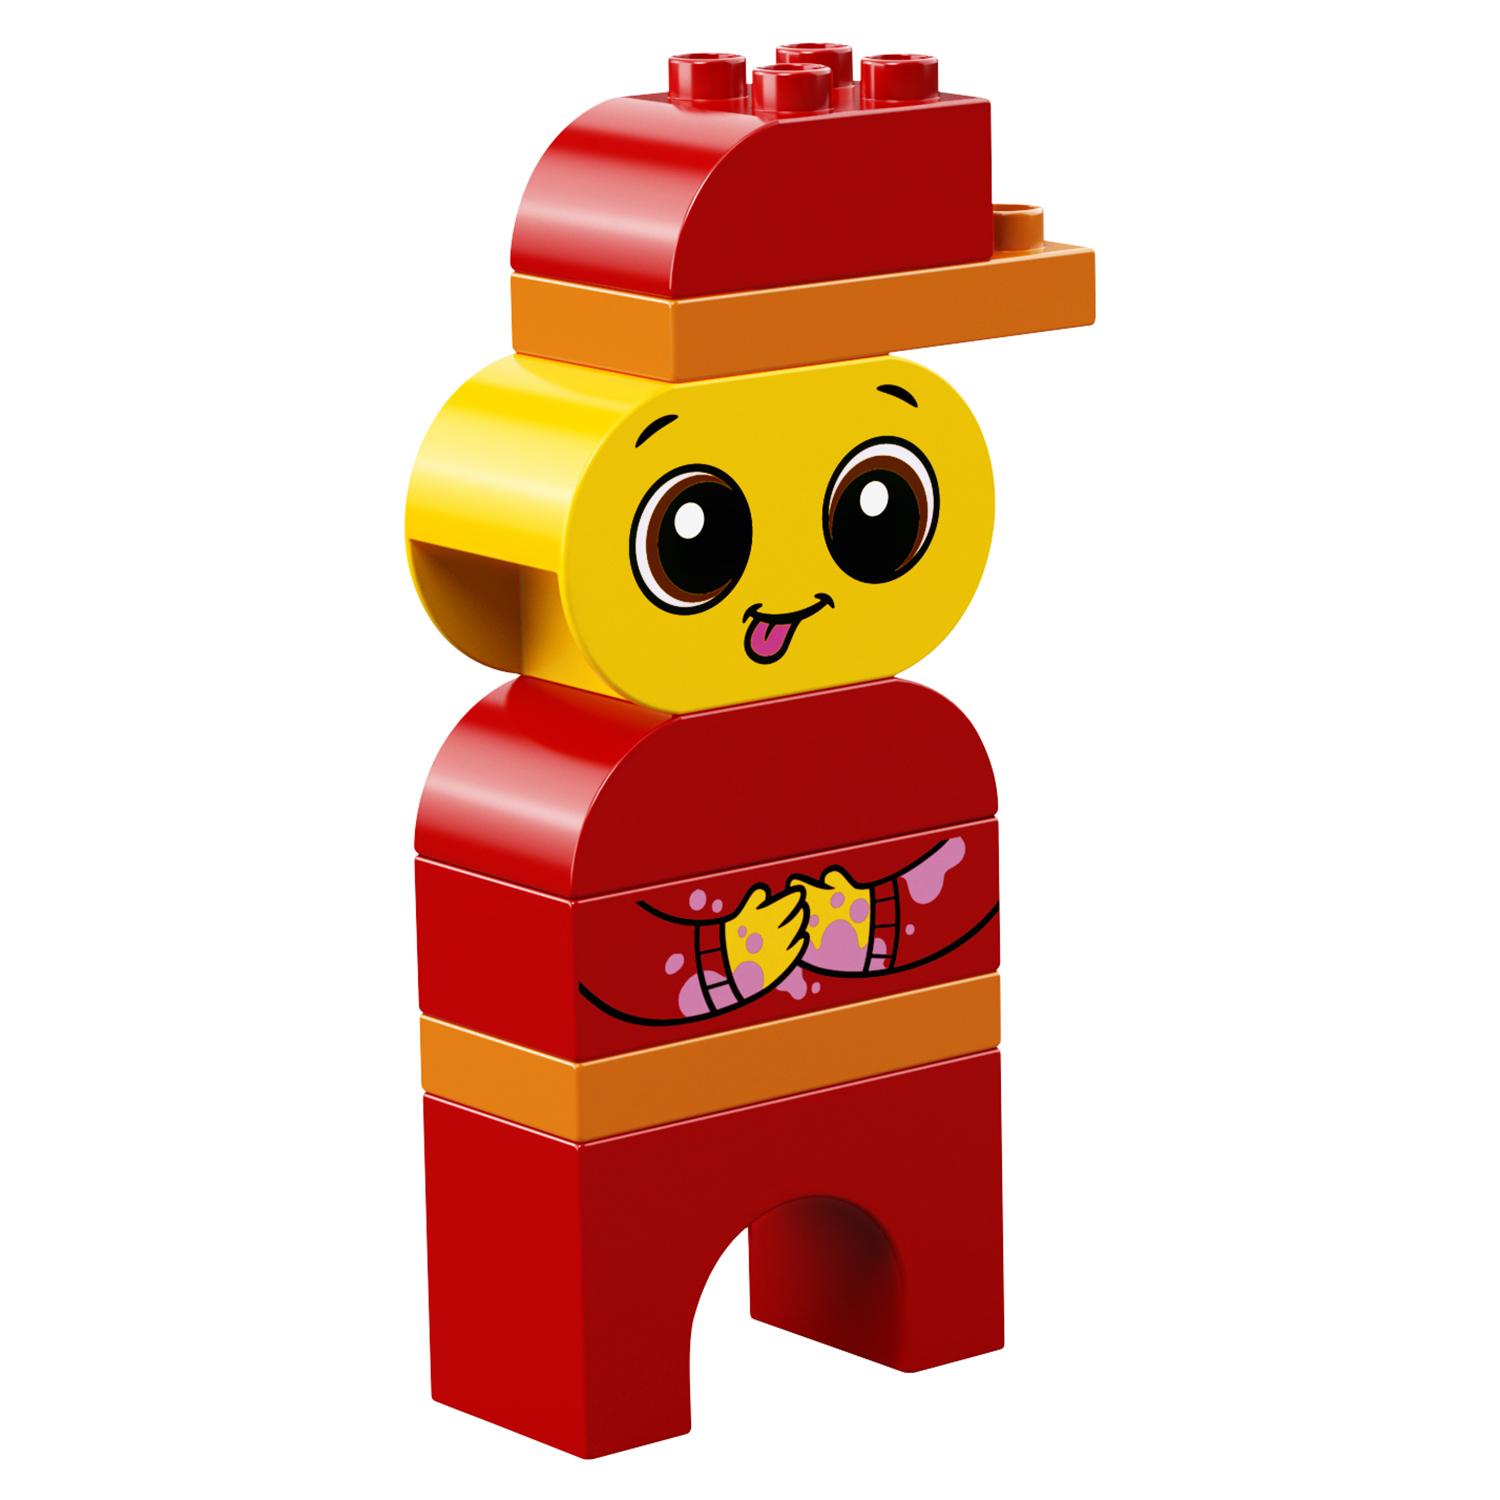 Lego Duplo 10861 Мои первые эмоции